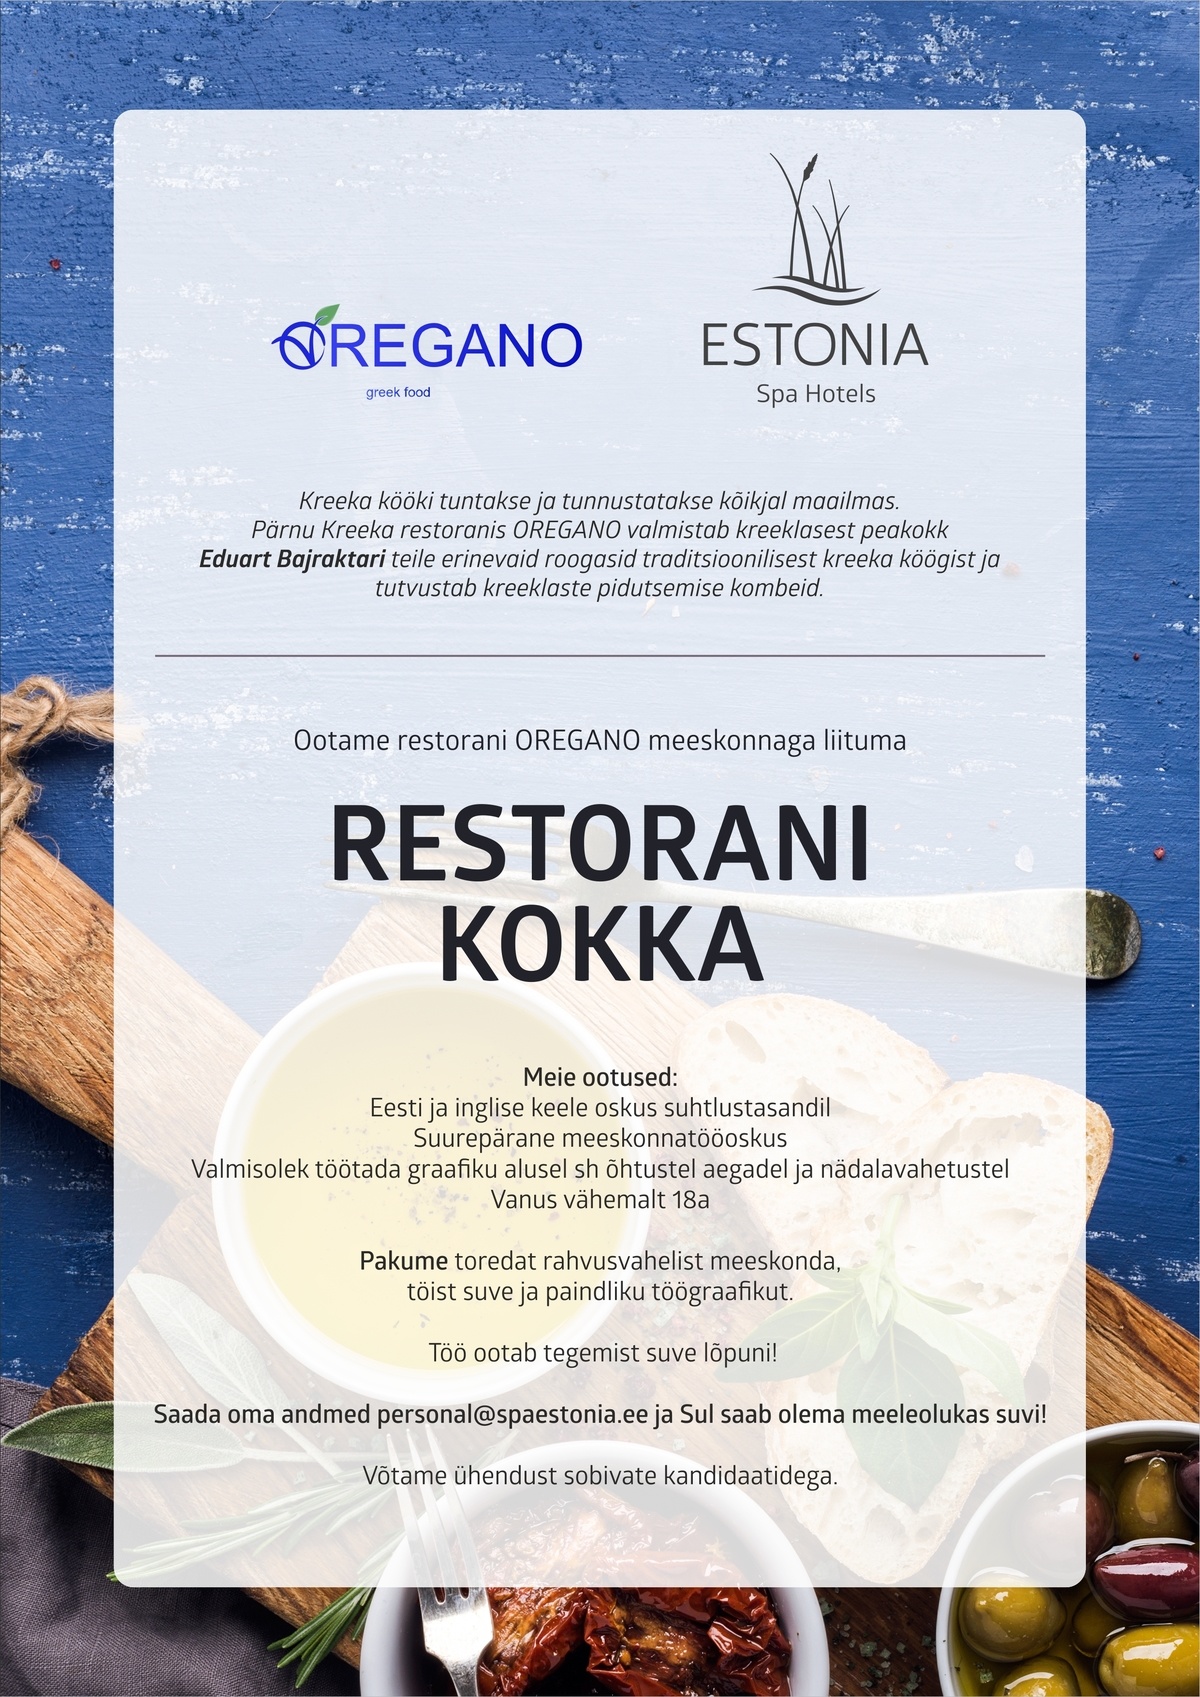 Estonia Spa Hotels AS Kokk